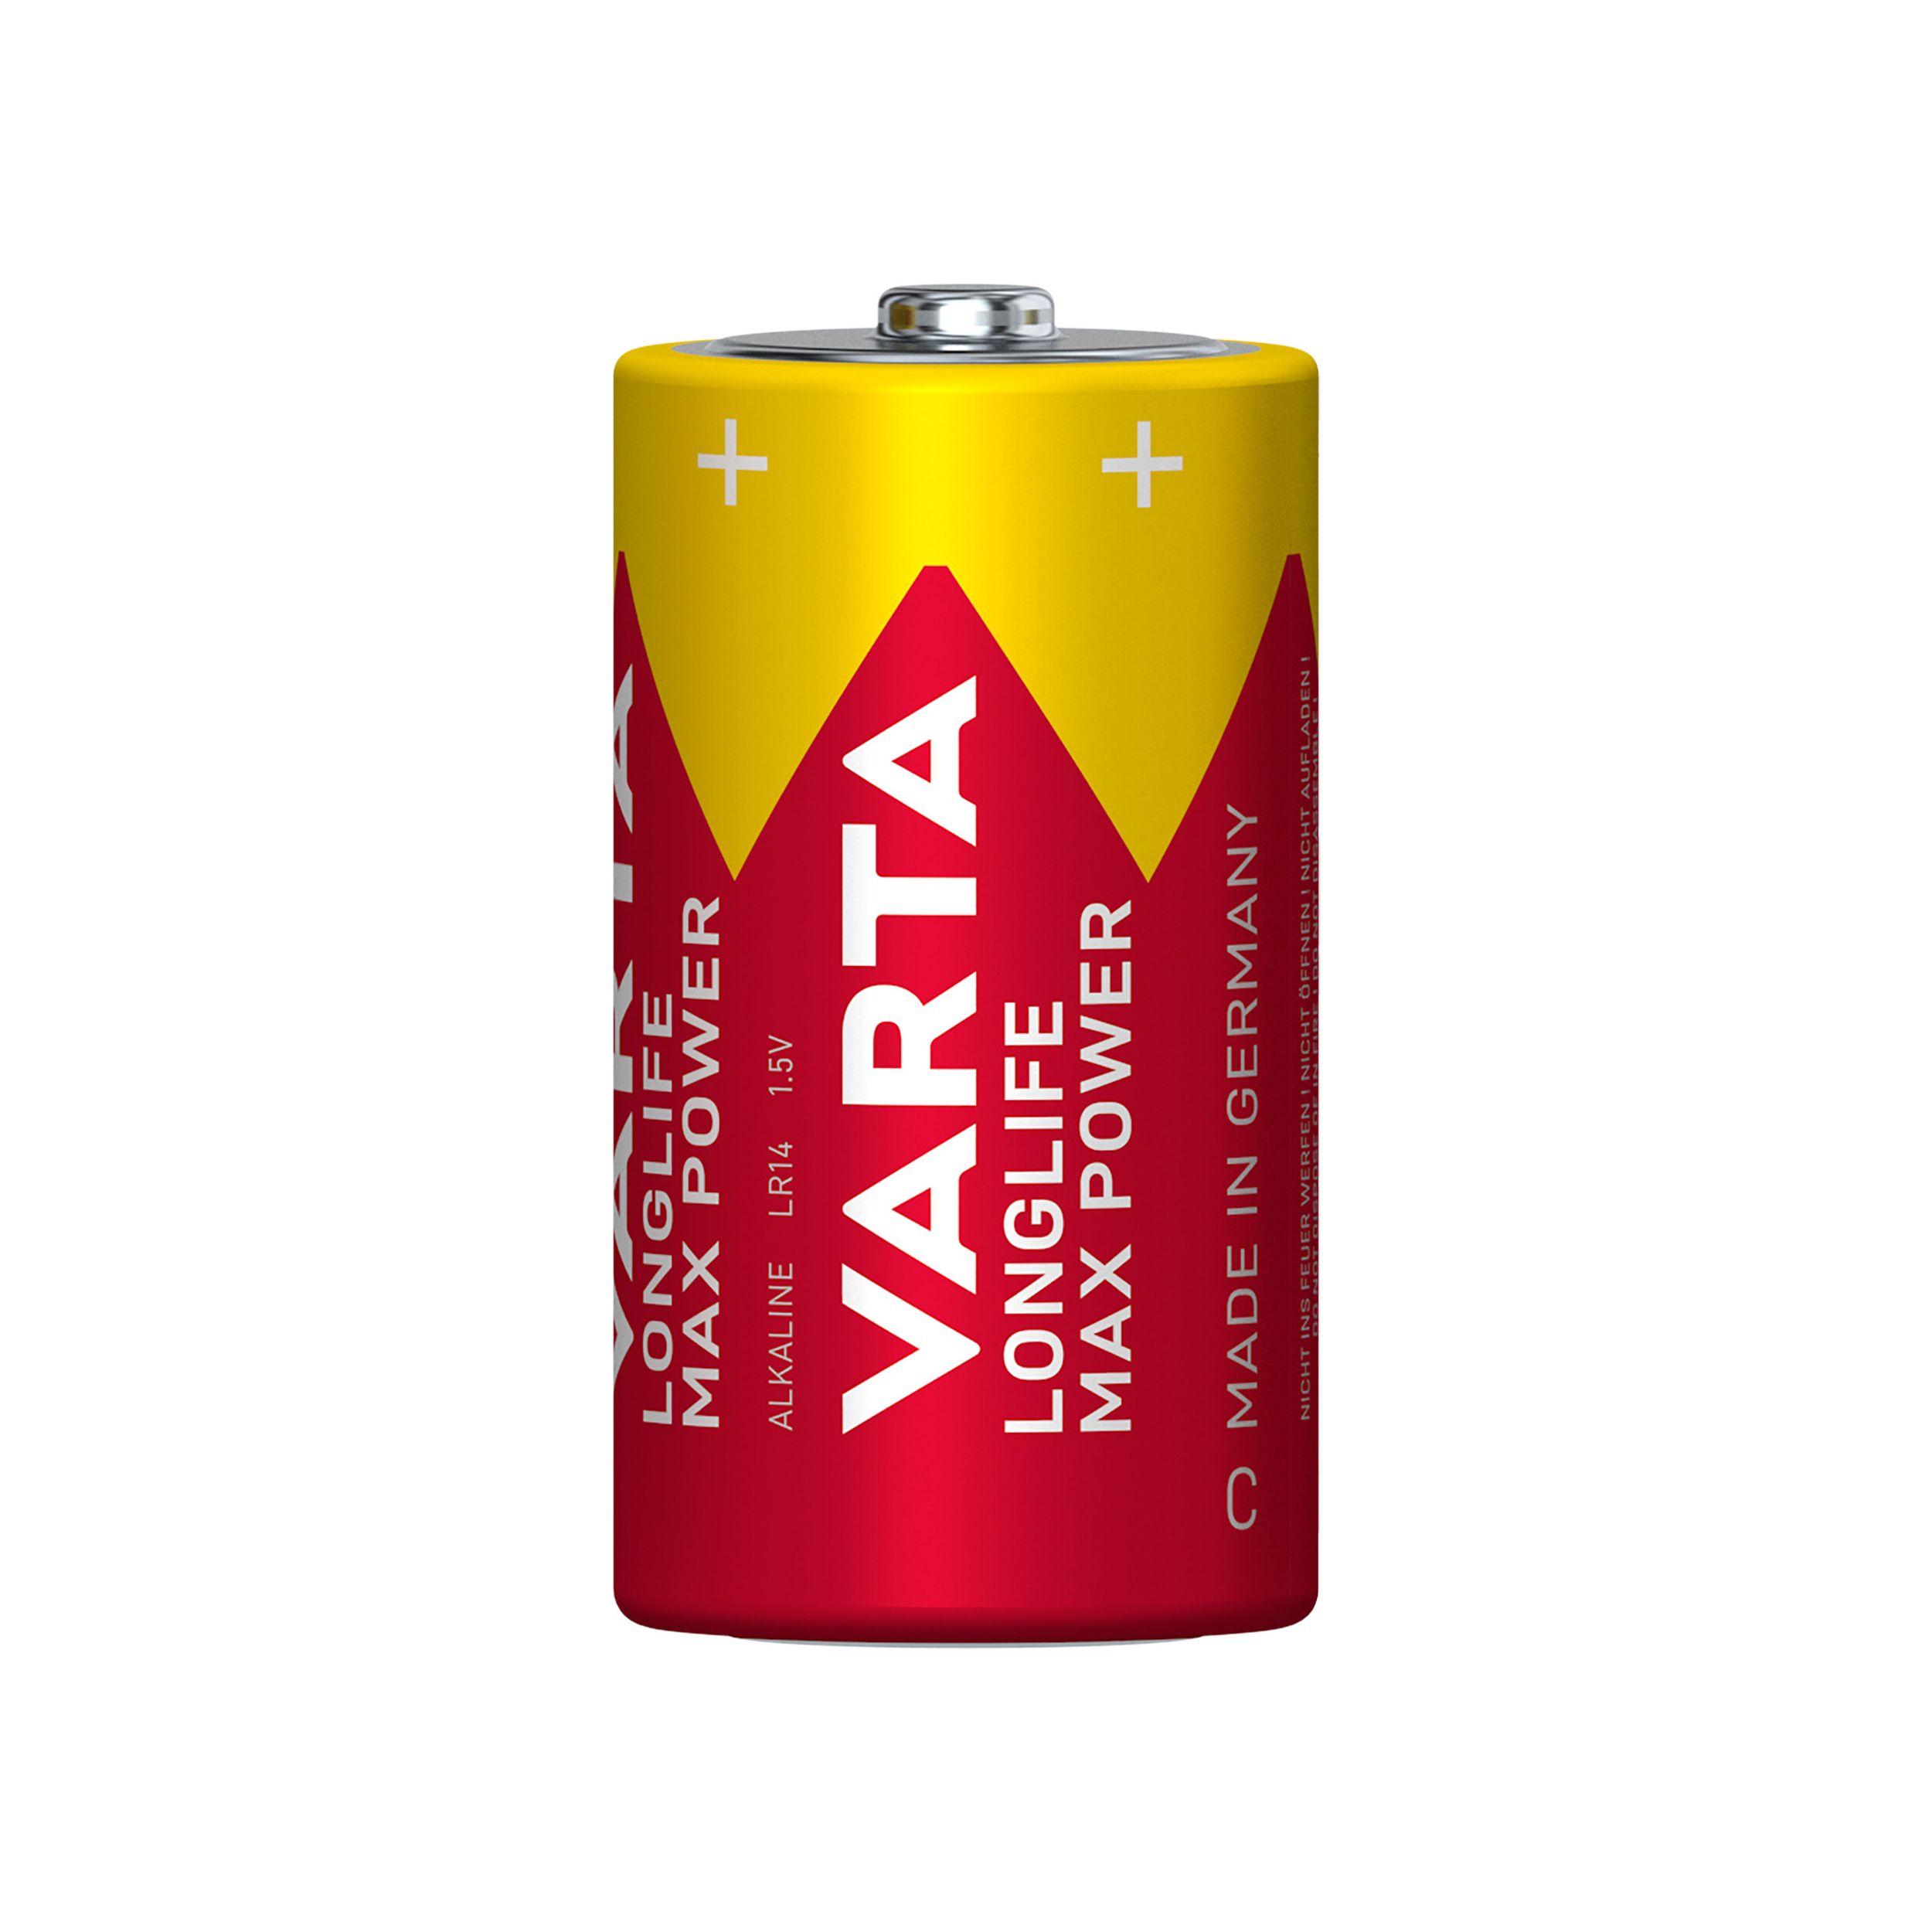 Varta Longlife Max Power 1.5V C Battery, Pack of 2